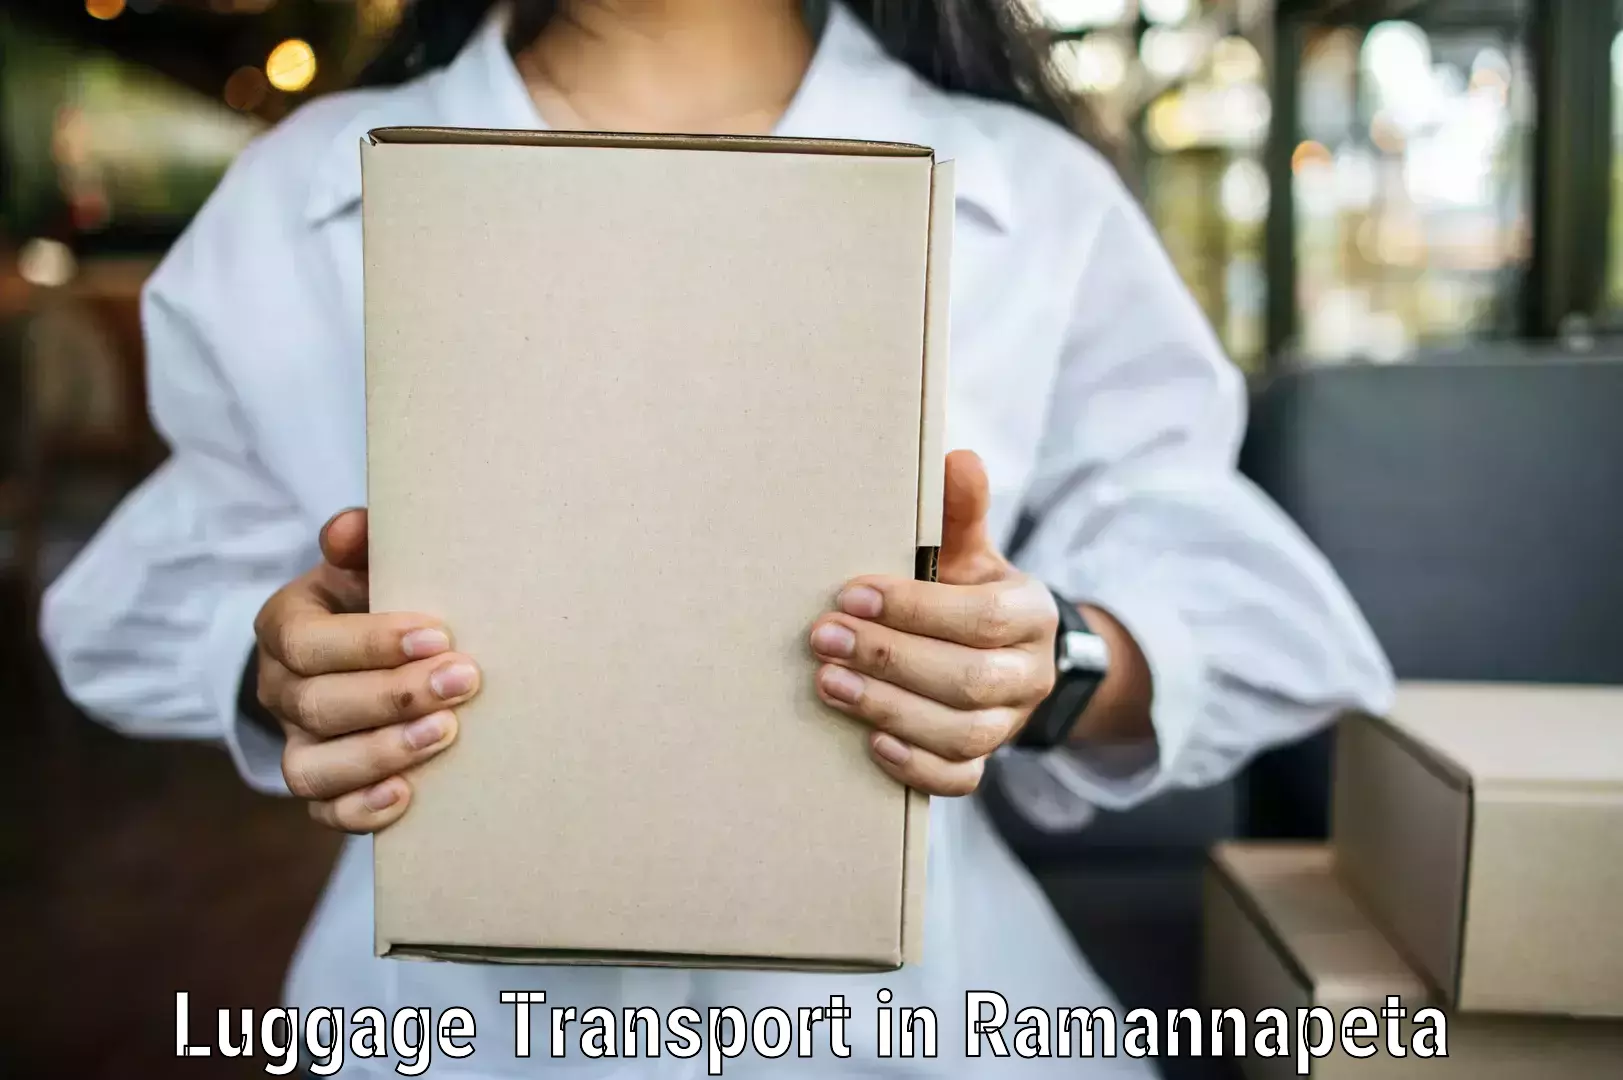 High-quality baggage shipment in Ramannapeta